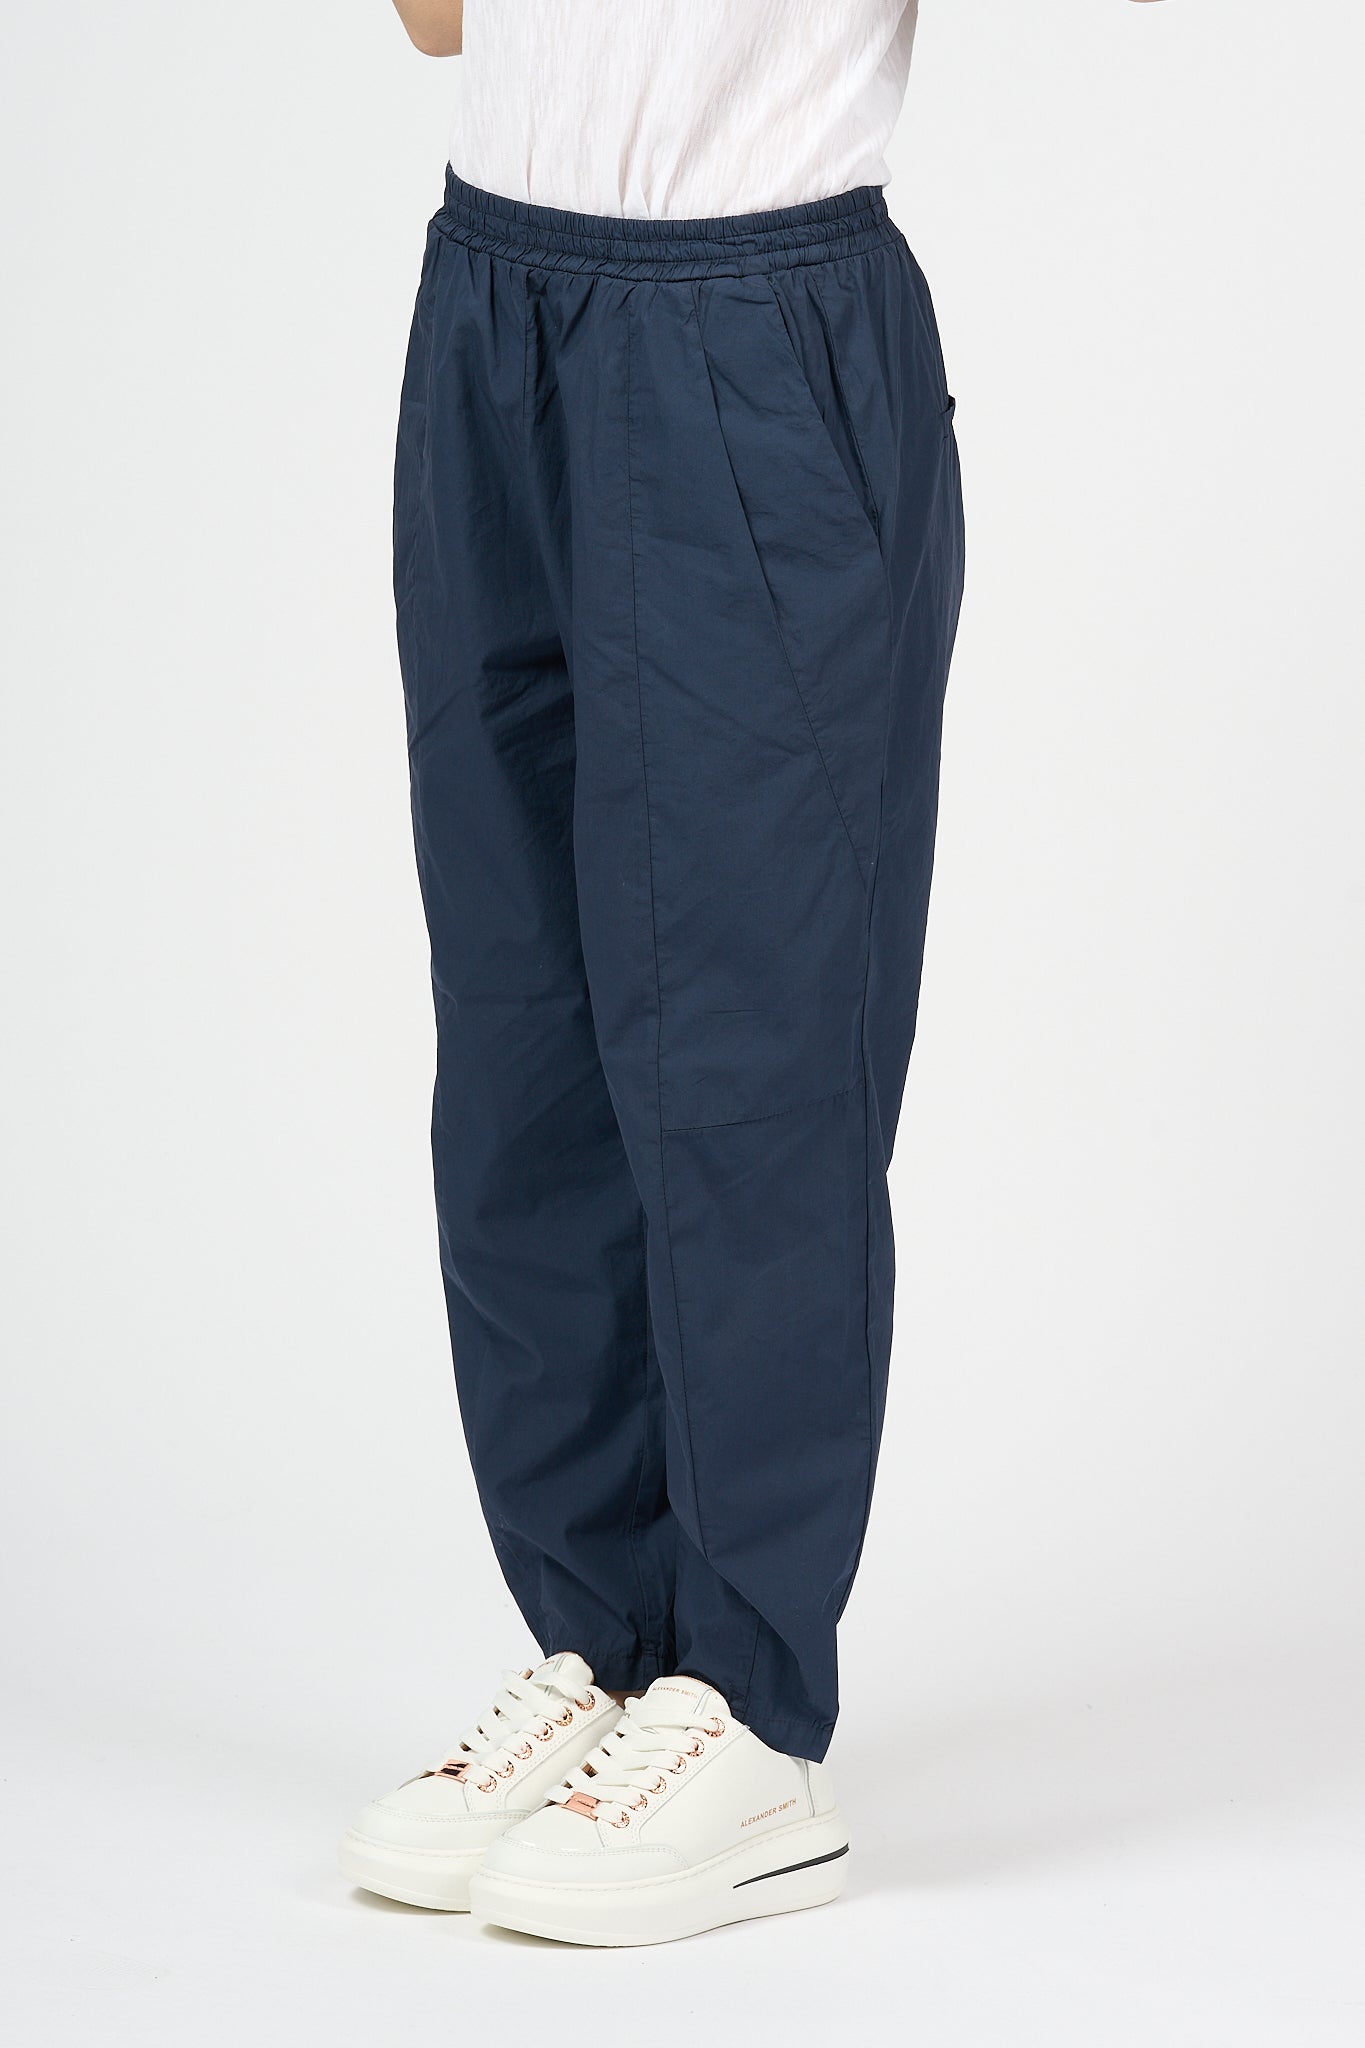 Transit Pantalone Cotone Blu Navy Donna-3